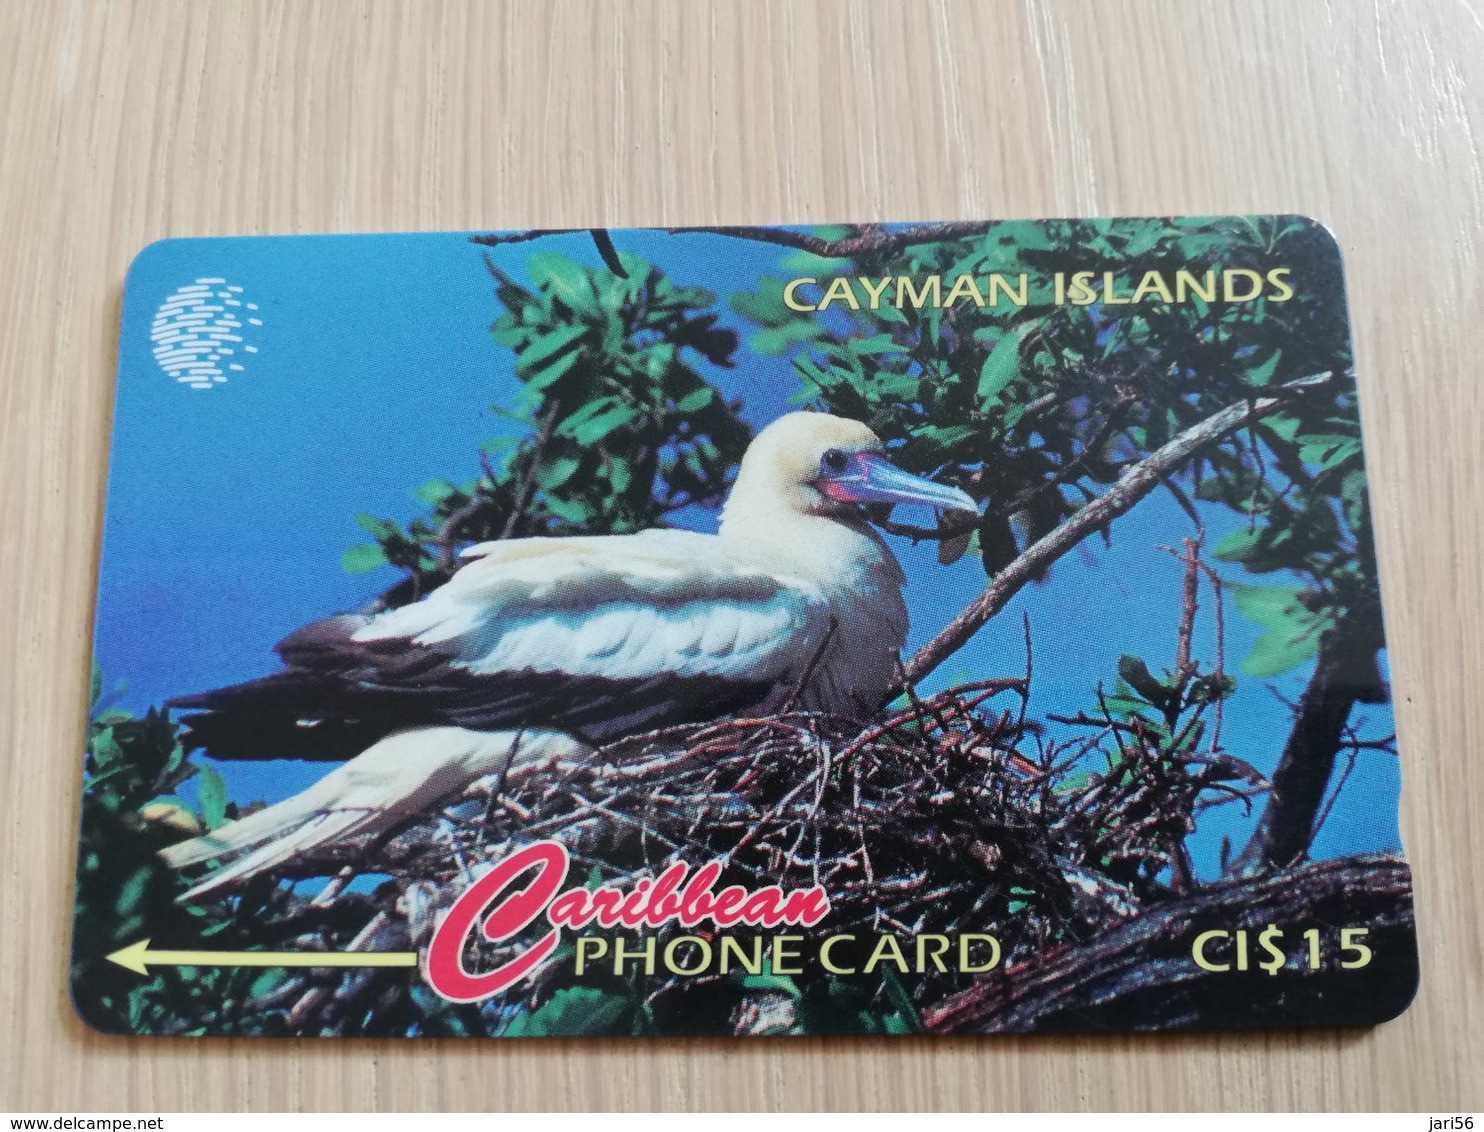 CAYMAN ISLANDS  CI $ 10,-  CAY-11D  CONTROL NR 11CCID  RED FOOTED BOOBY      NEW  LOGO     Fine Used Card  ** 3085** - Cayman Islands